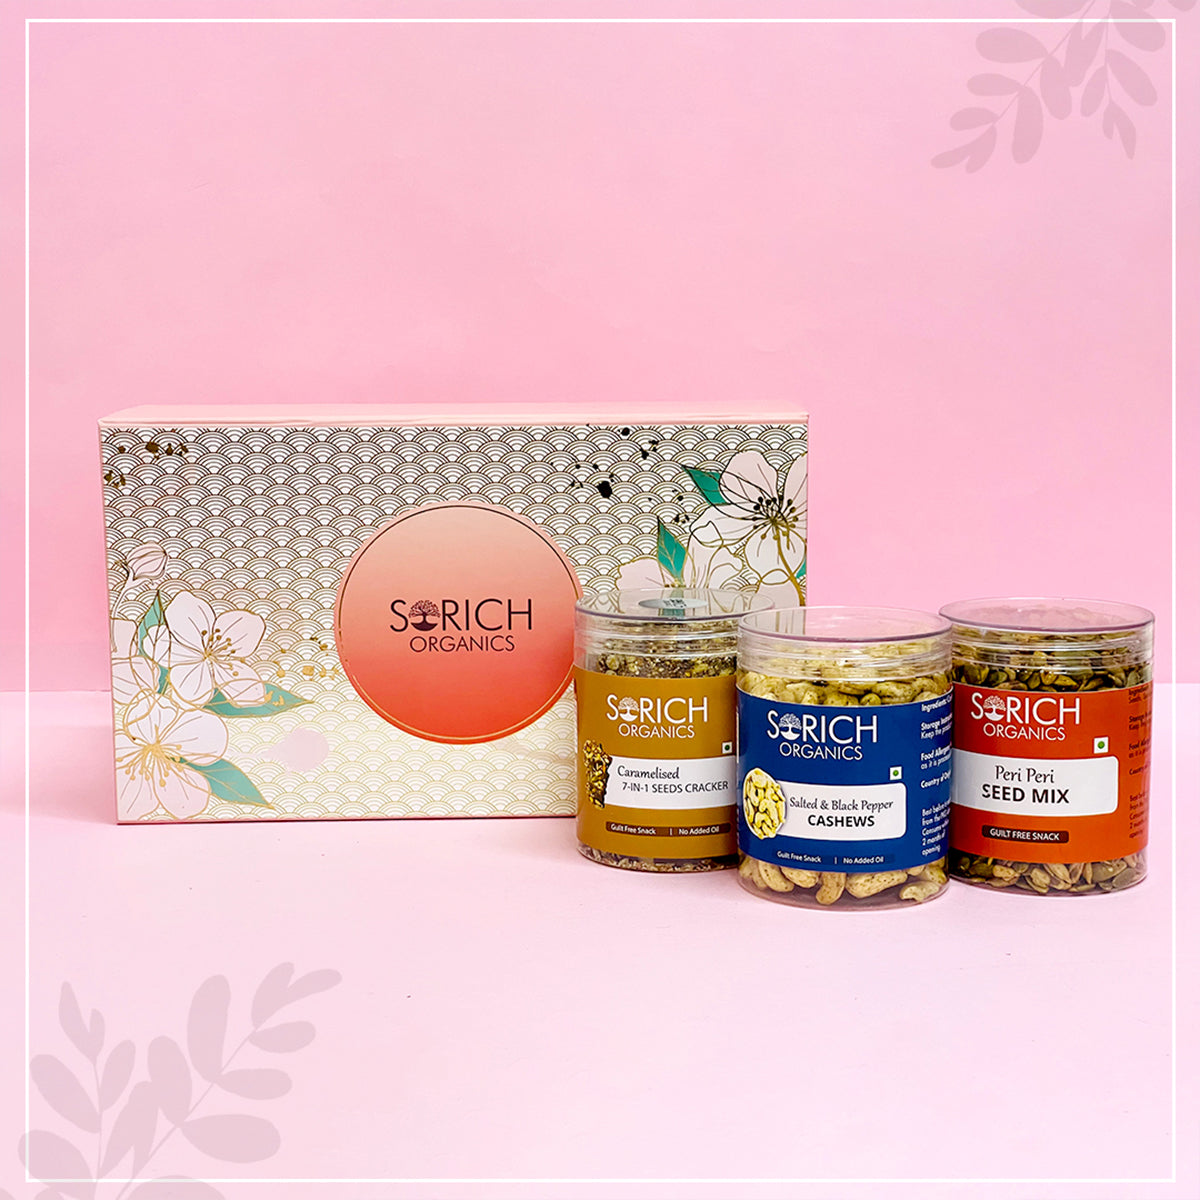 Premium Blush Diwali Gift Hamper for Family and Friends | Caramalised Cracker 225g, Salted & Black Pepper Cashew 250g, Peri Peri Seeds Mix 300g - Sorich